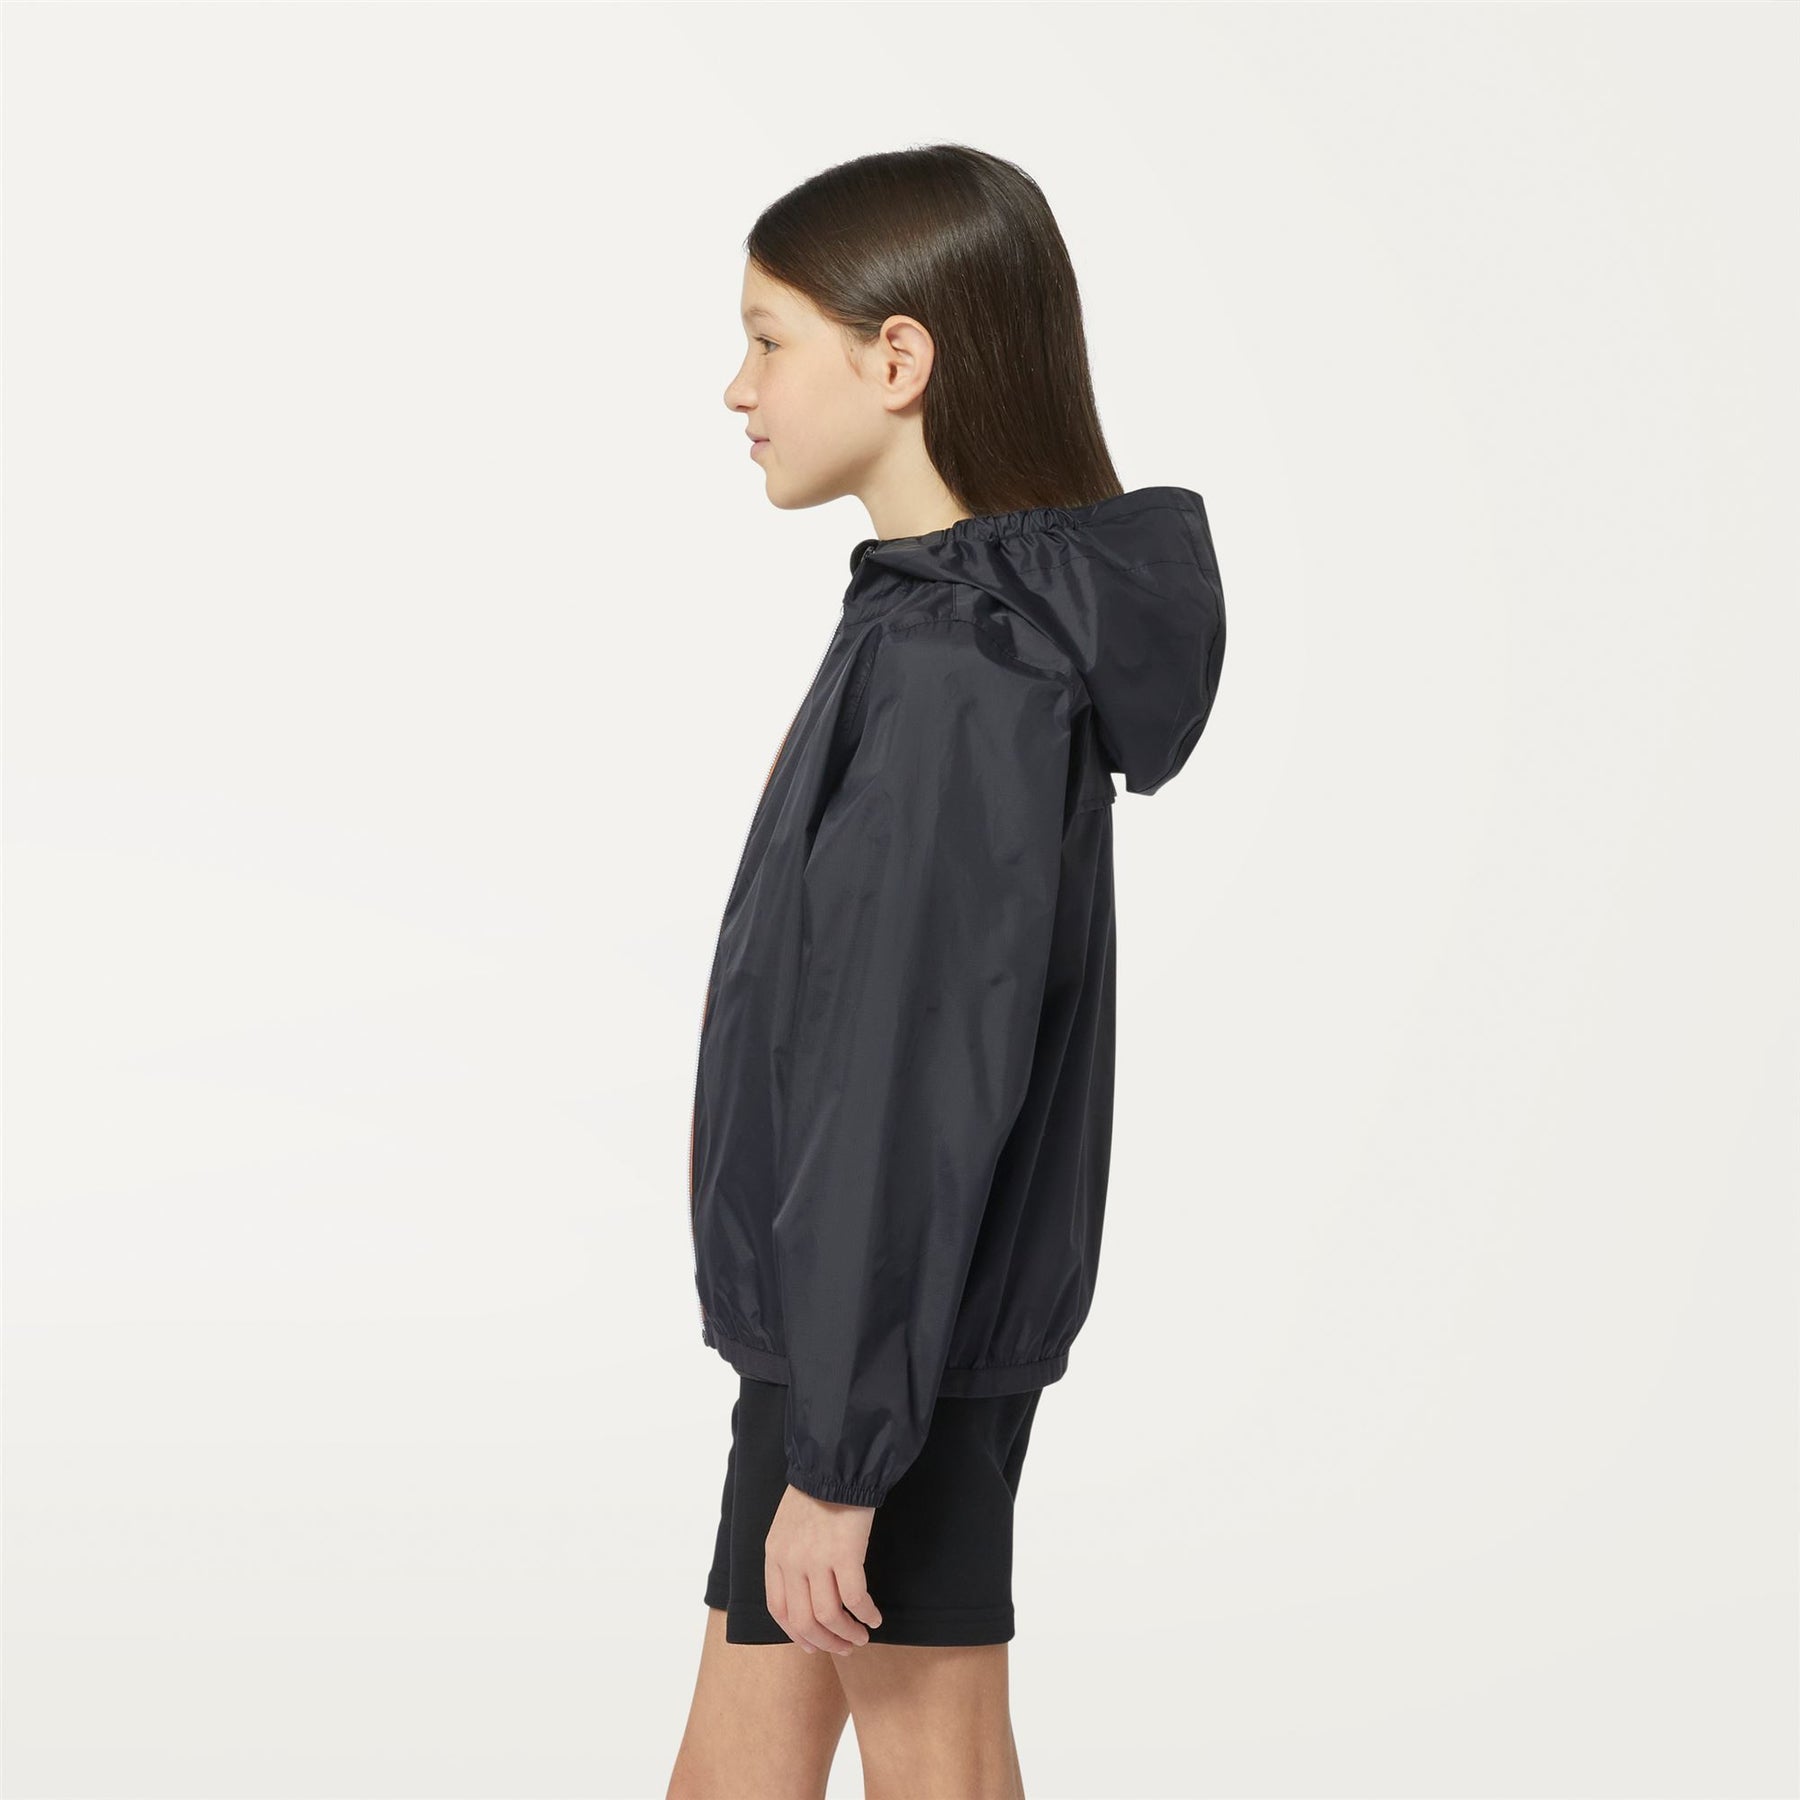 Claude - Kids Packable Full Zip Rain Jacket in Black Pure